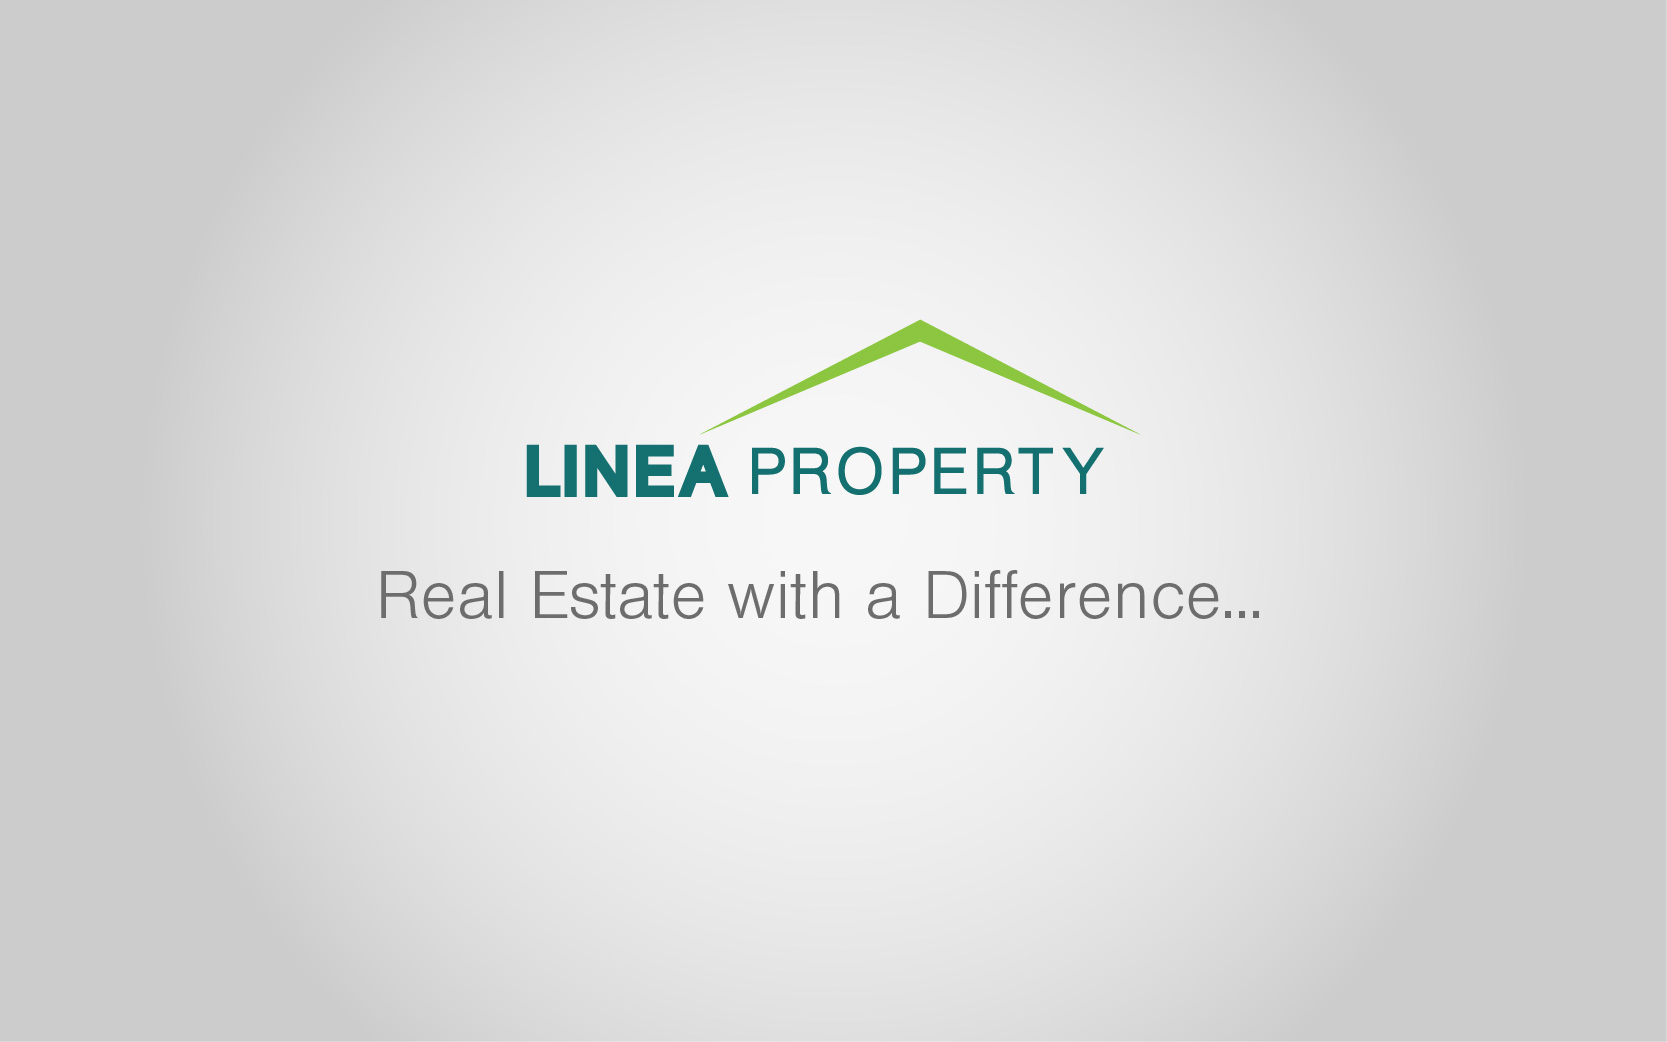 Linea Property